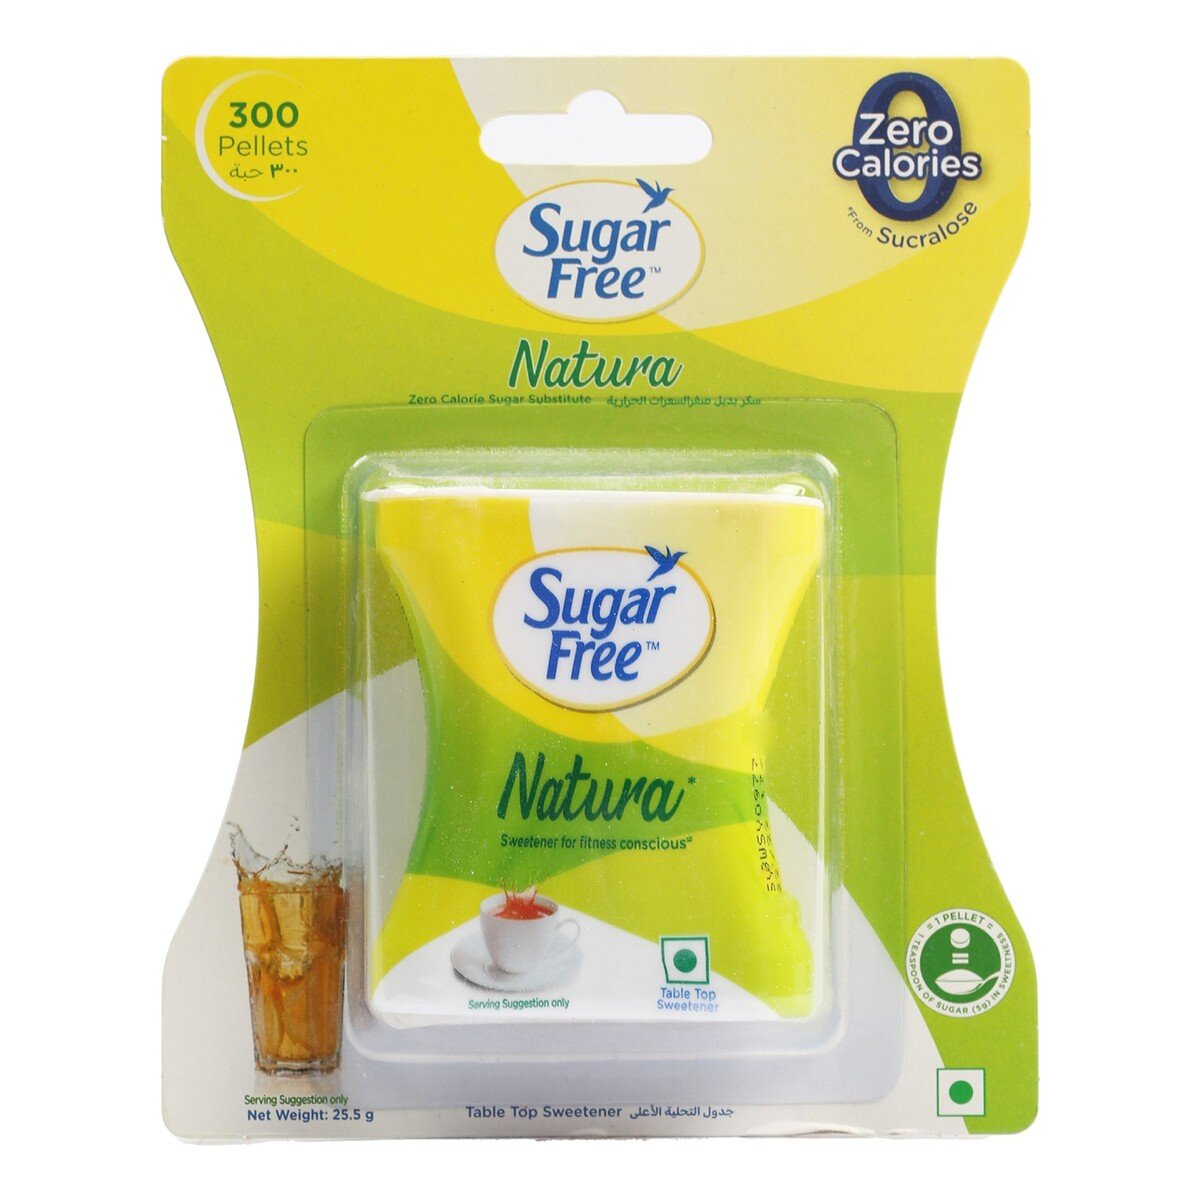 Sugar Free Natura Sweeteners for Fitness Conscious 300 pcs